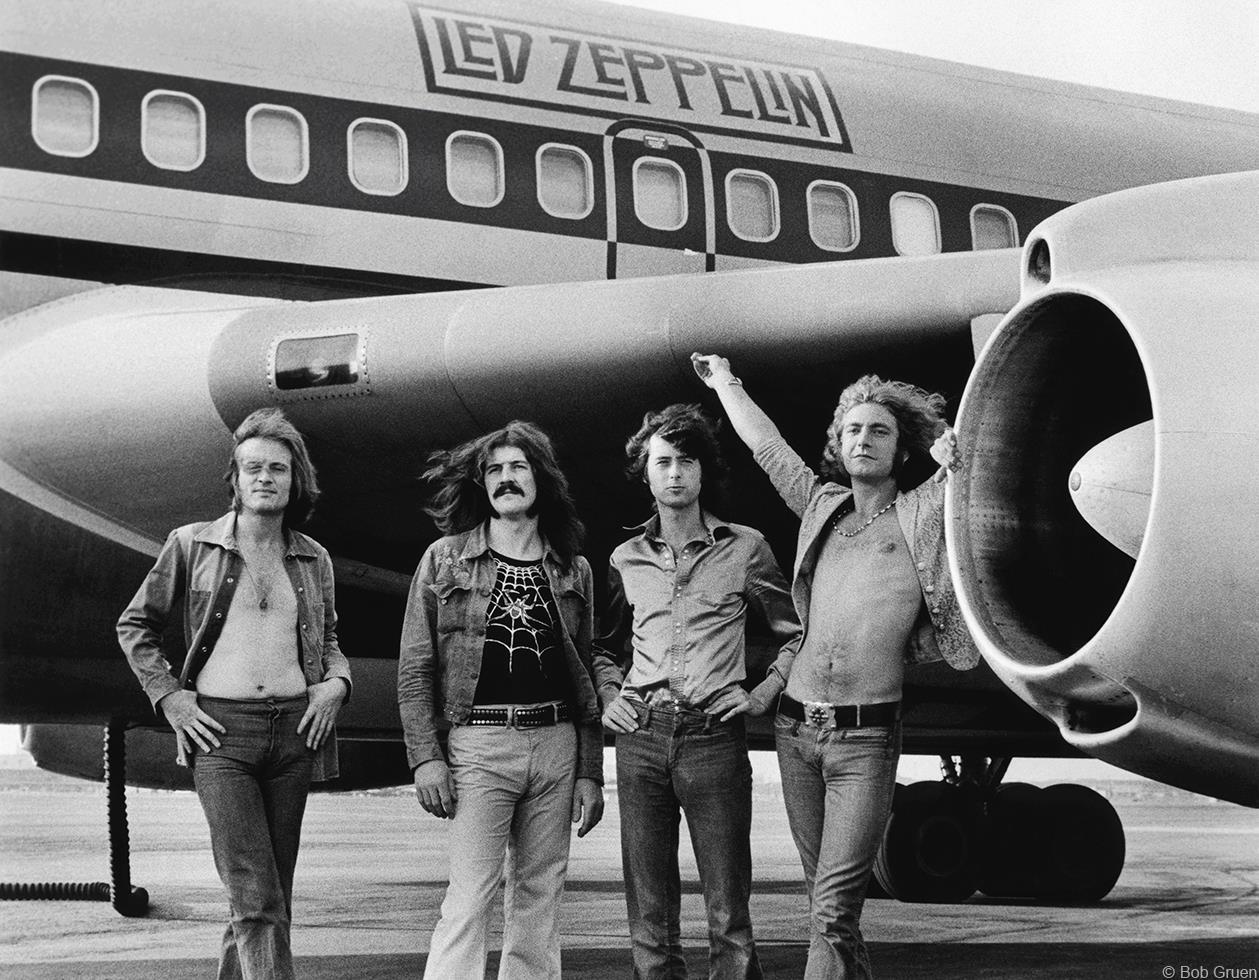 Black and White Photograph Bob Gruen - Led Zeppelin "Plane" (avion)